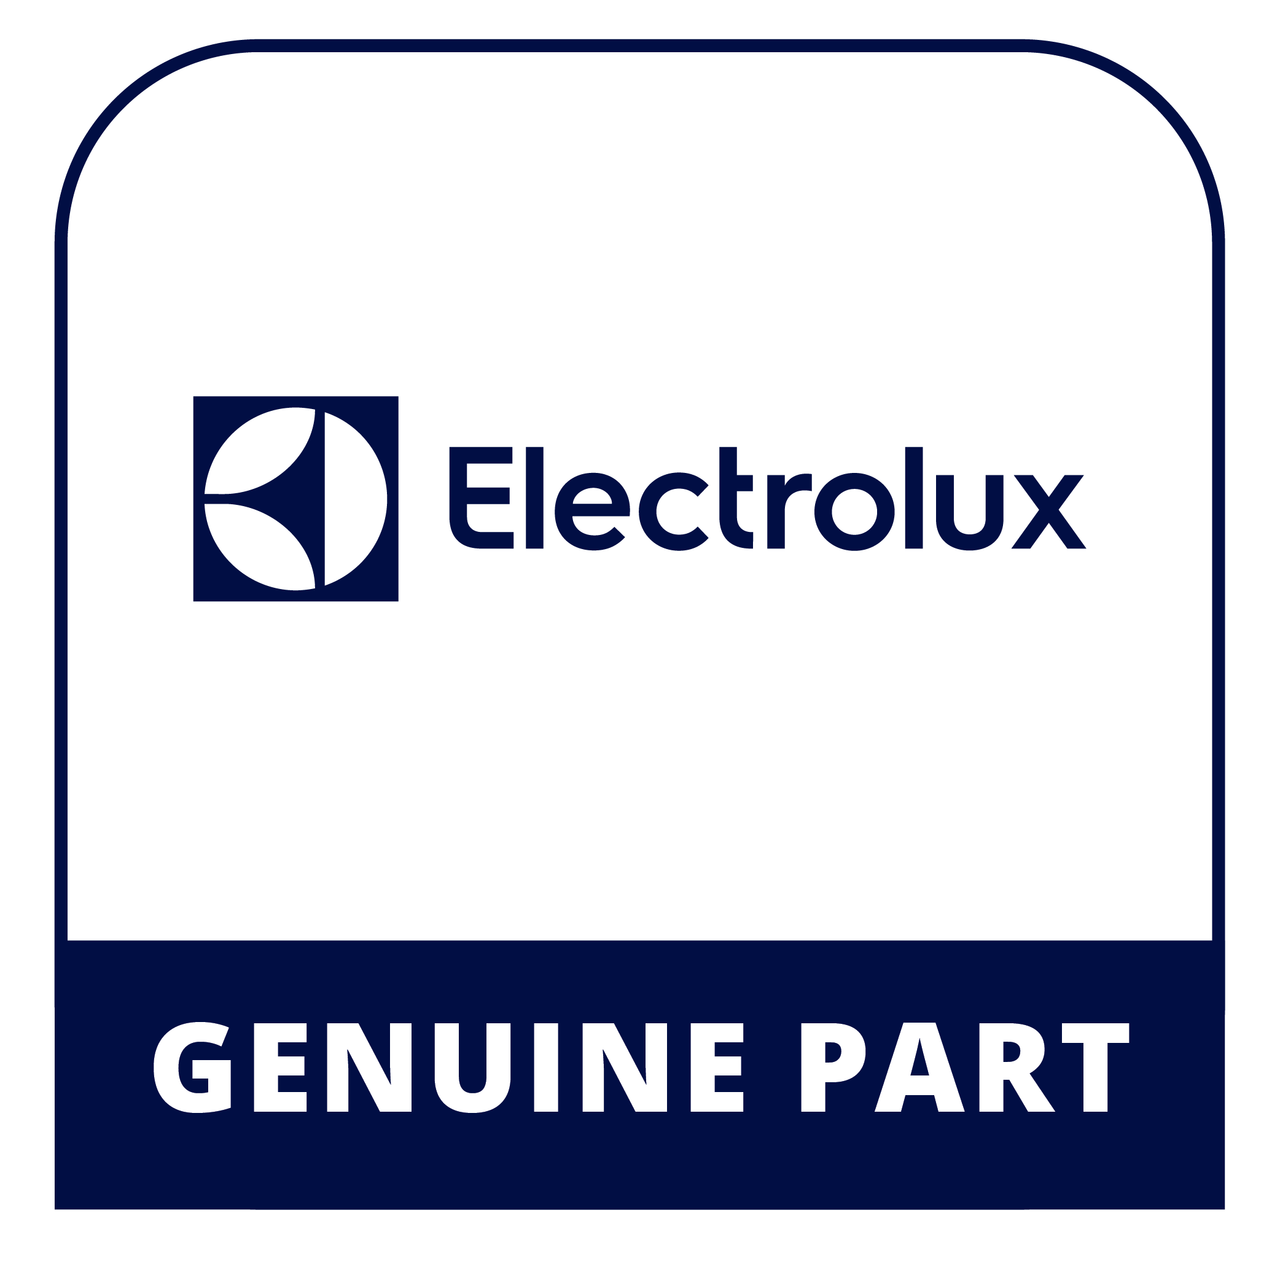 Frigidaire - Electrolux 316543907 - Knob - Genuine Electrolux Part